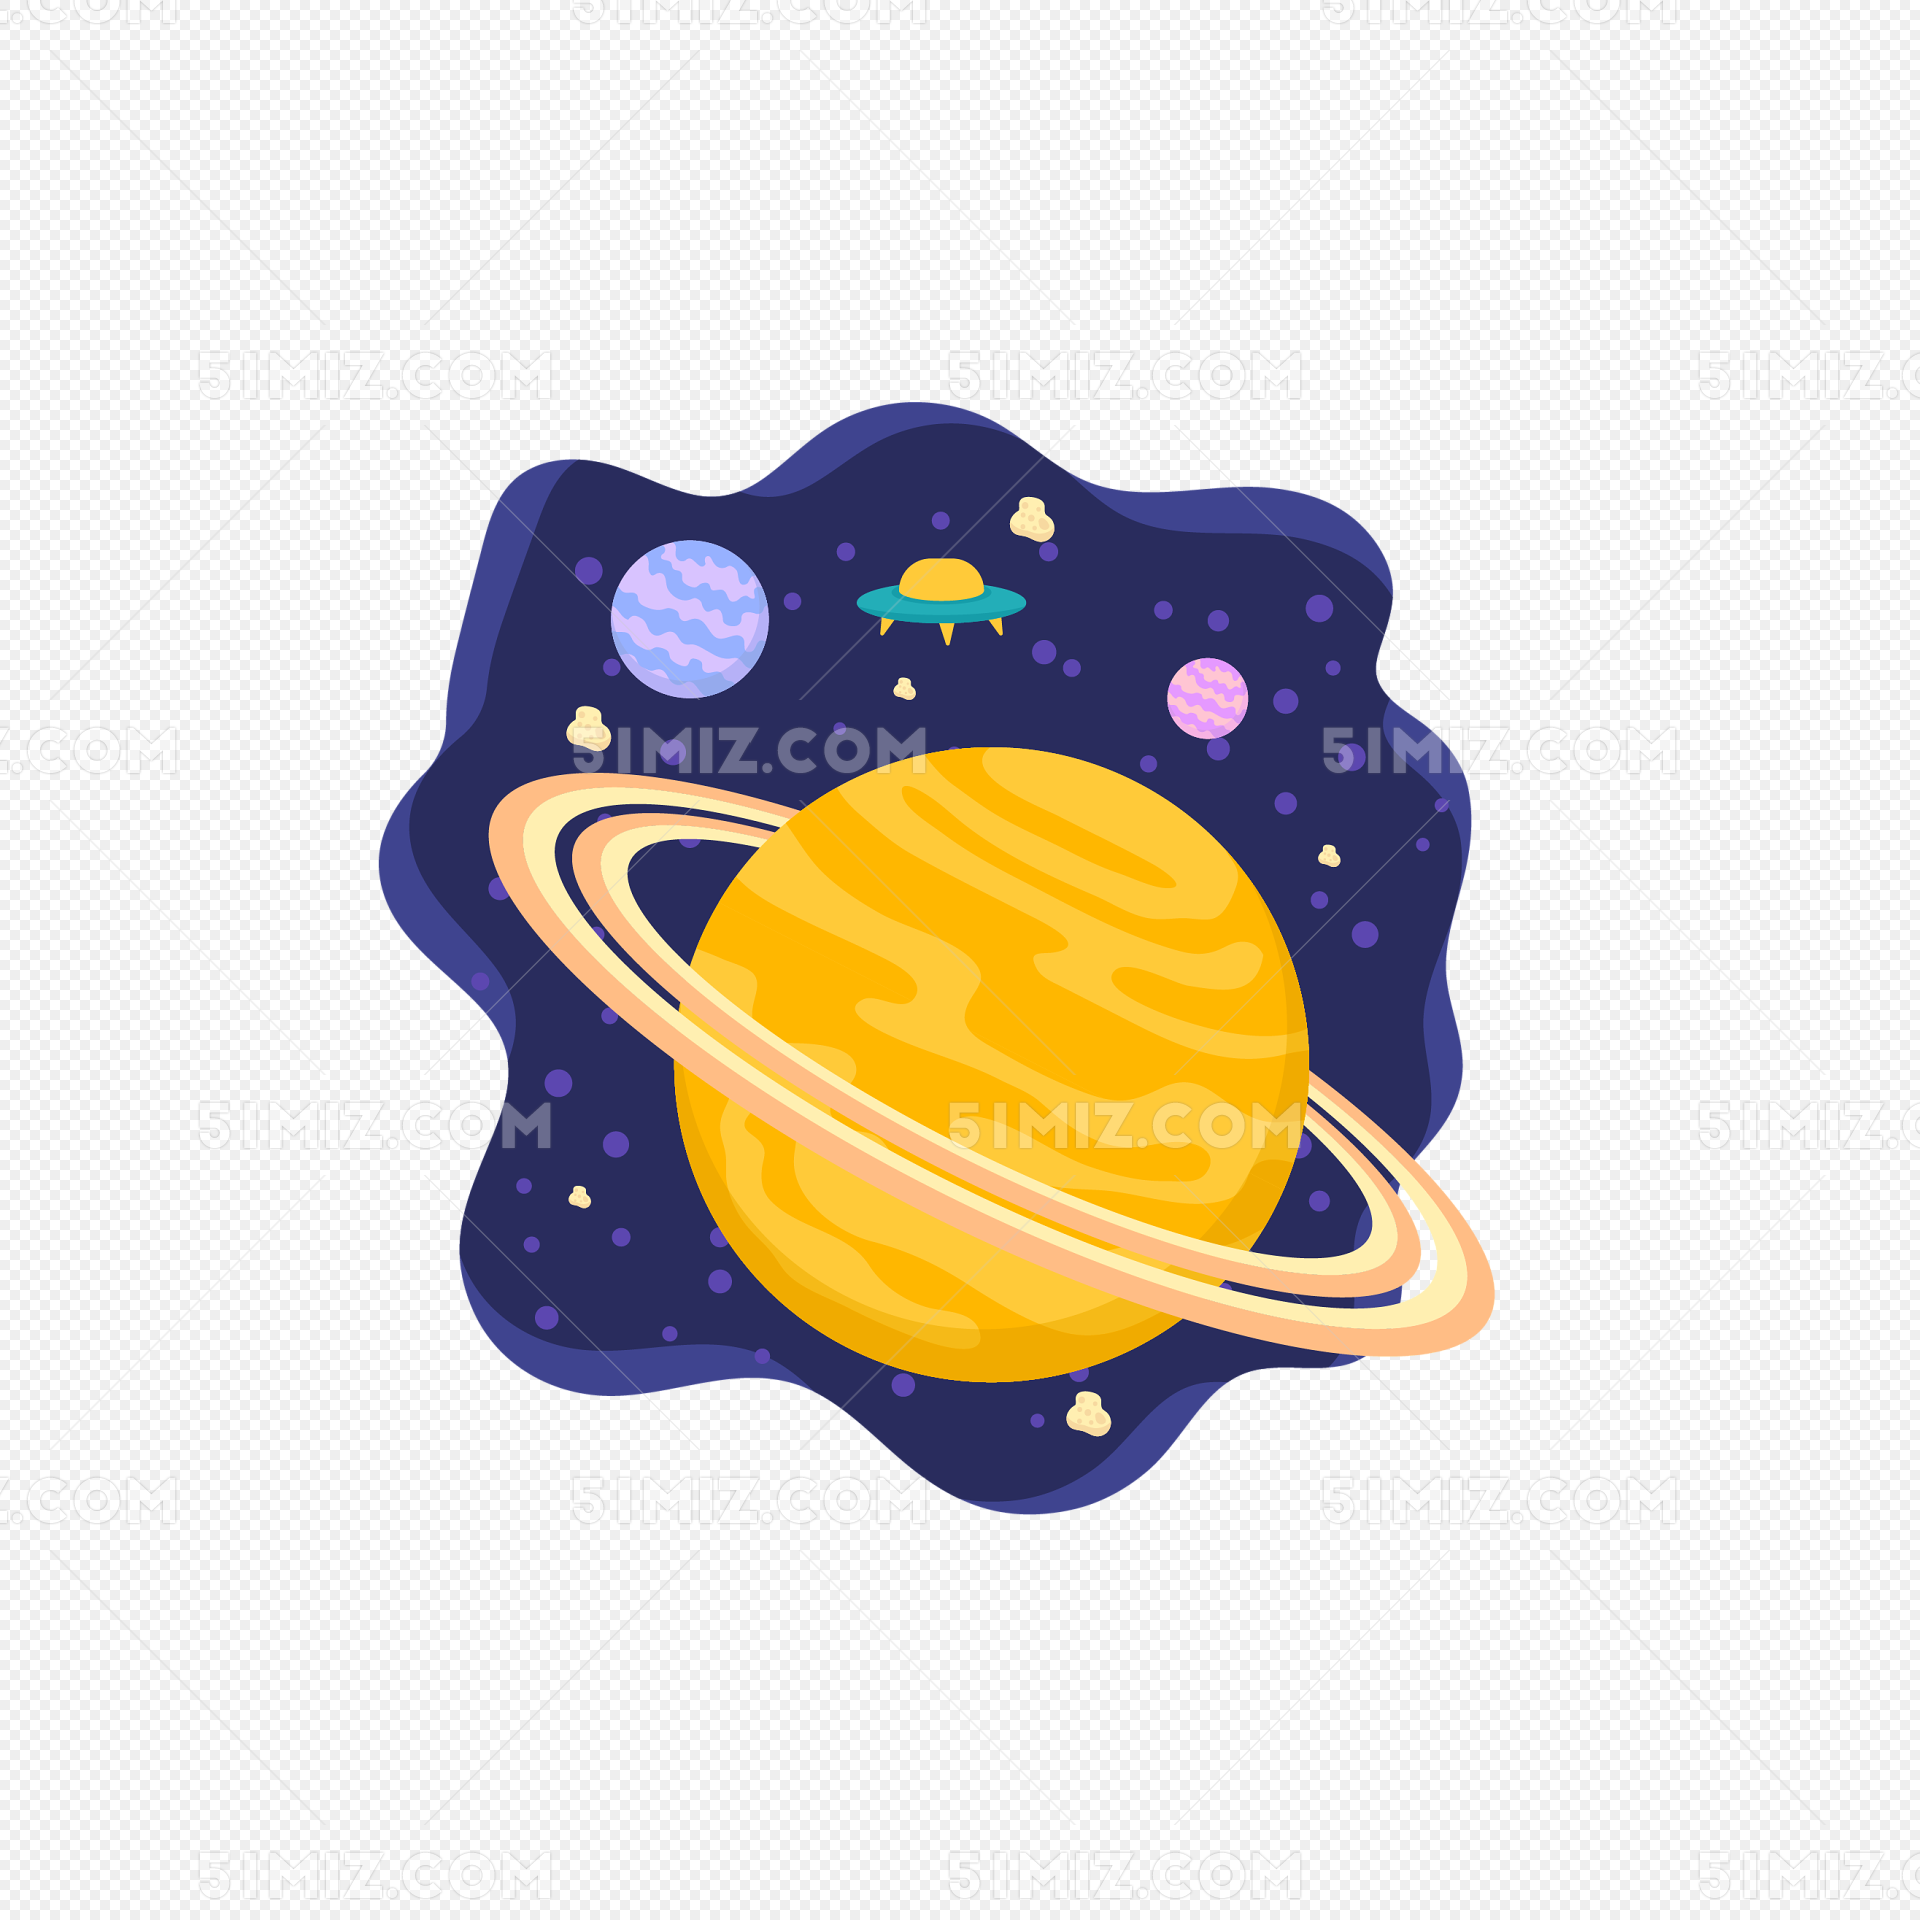 Premium Vector | Sketch planet icon set, ink hand drawn illustration